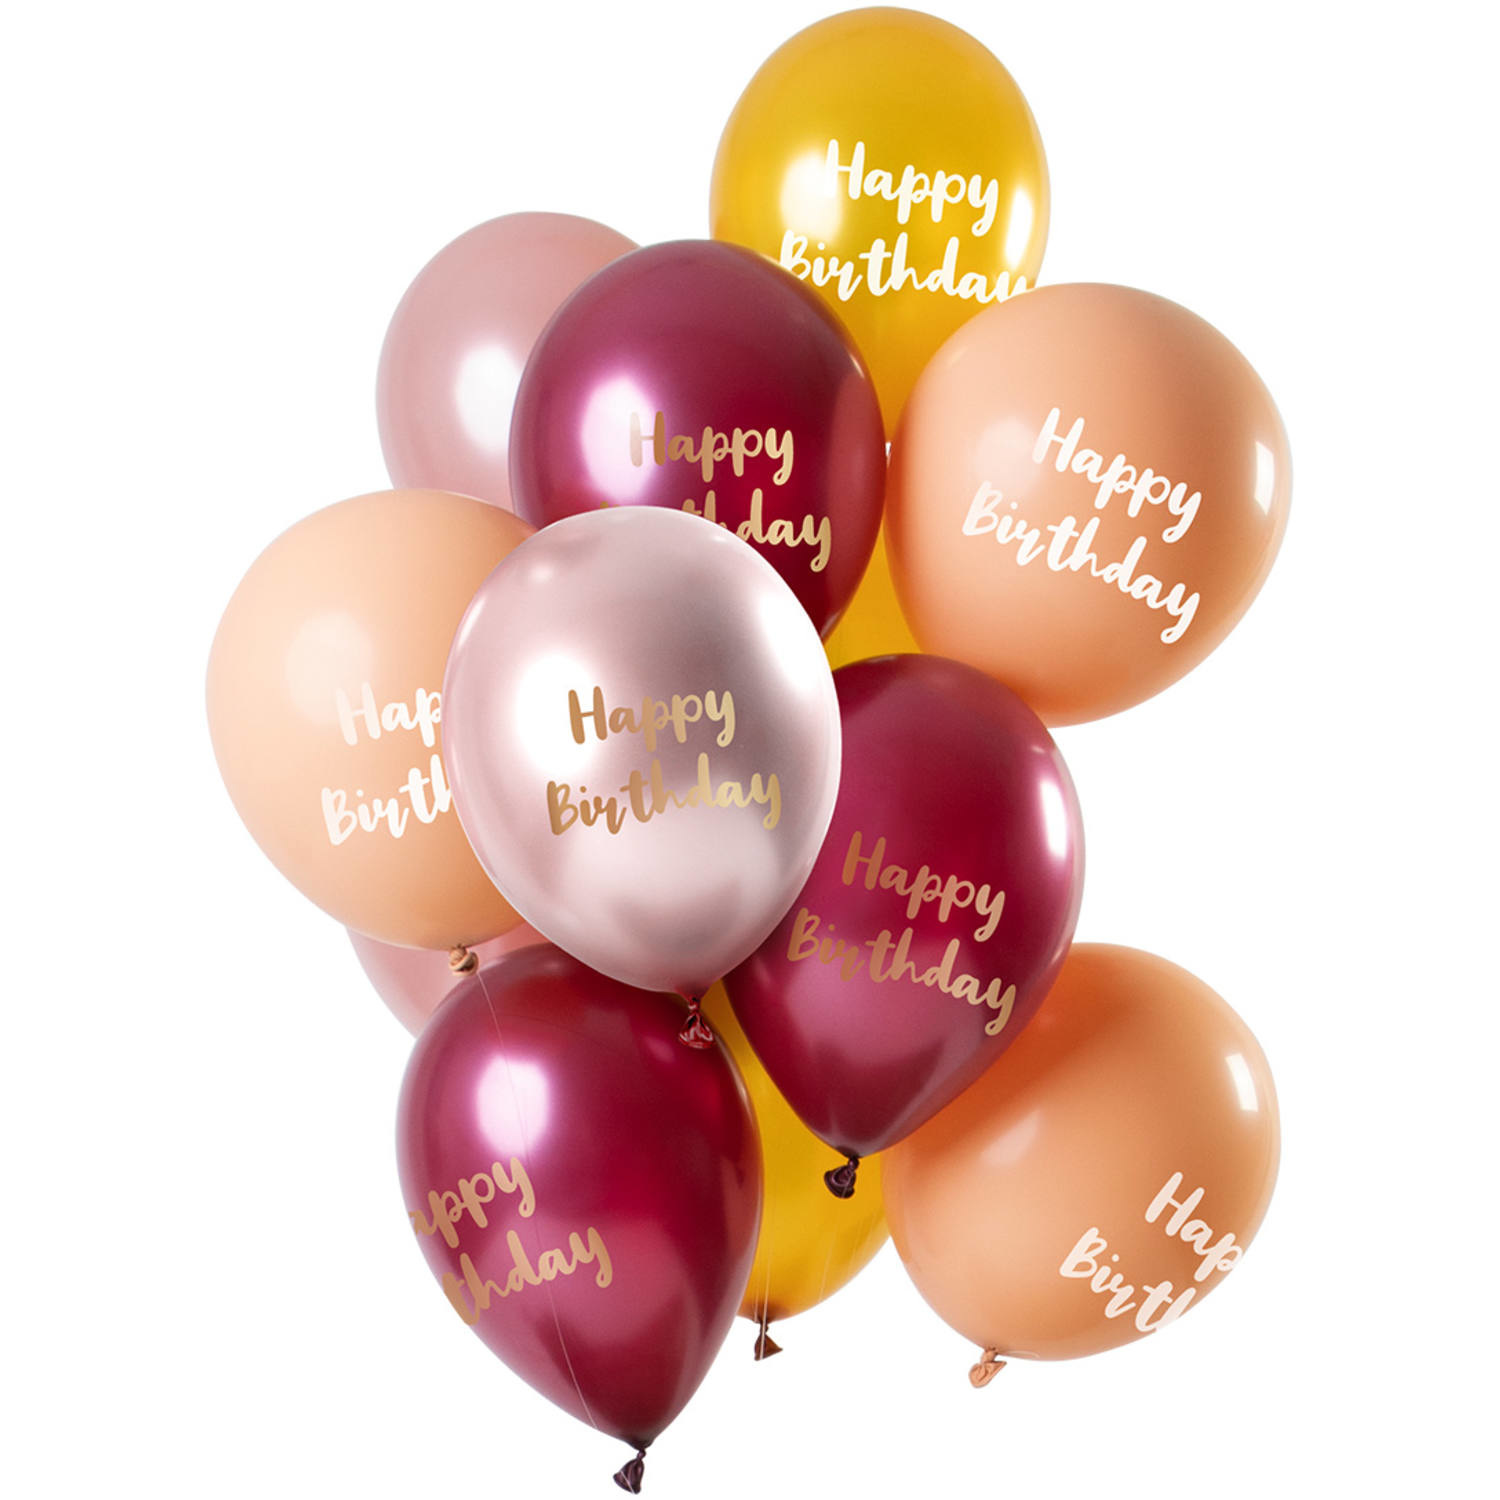 drijvend Geletterdheid Rudyard Kipling Happy Birthday Ballonnen Mix Roze/Goud - 12stk - Feestperpost